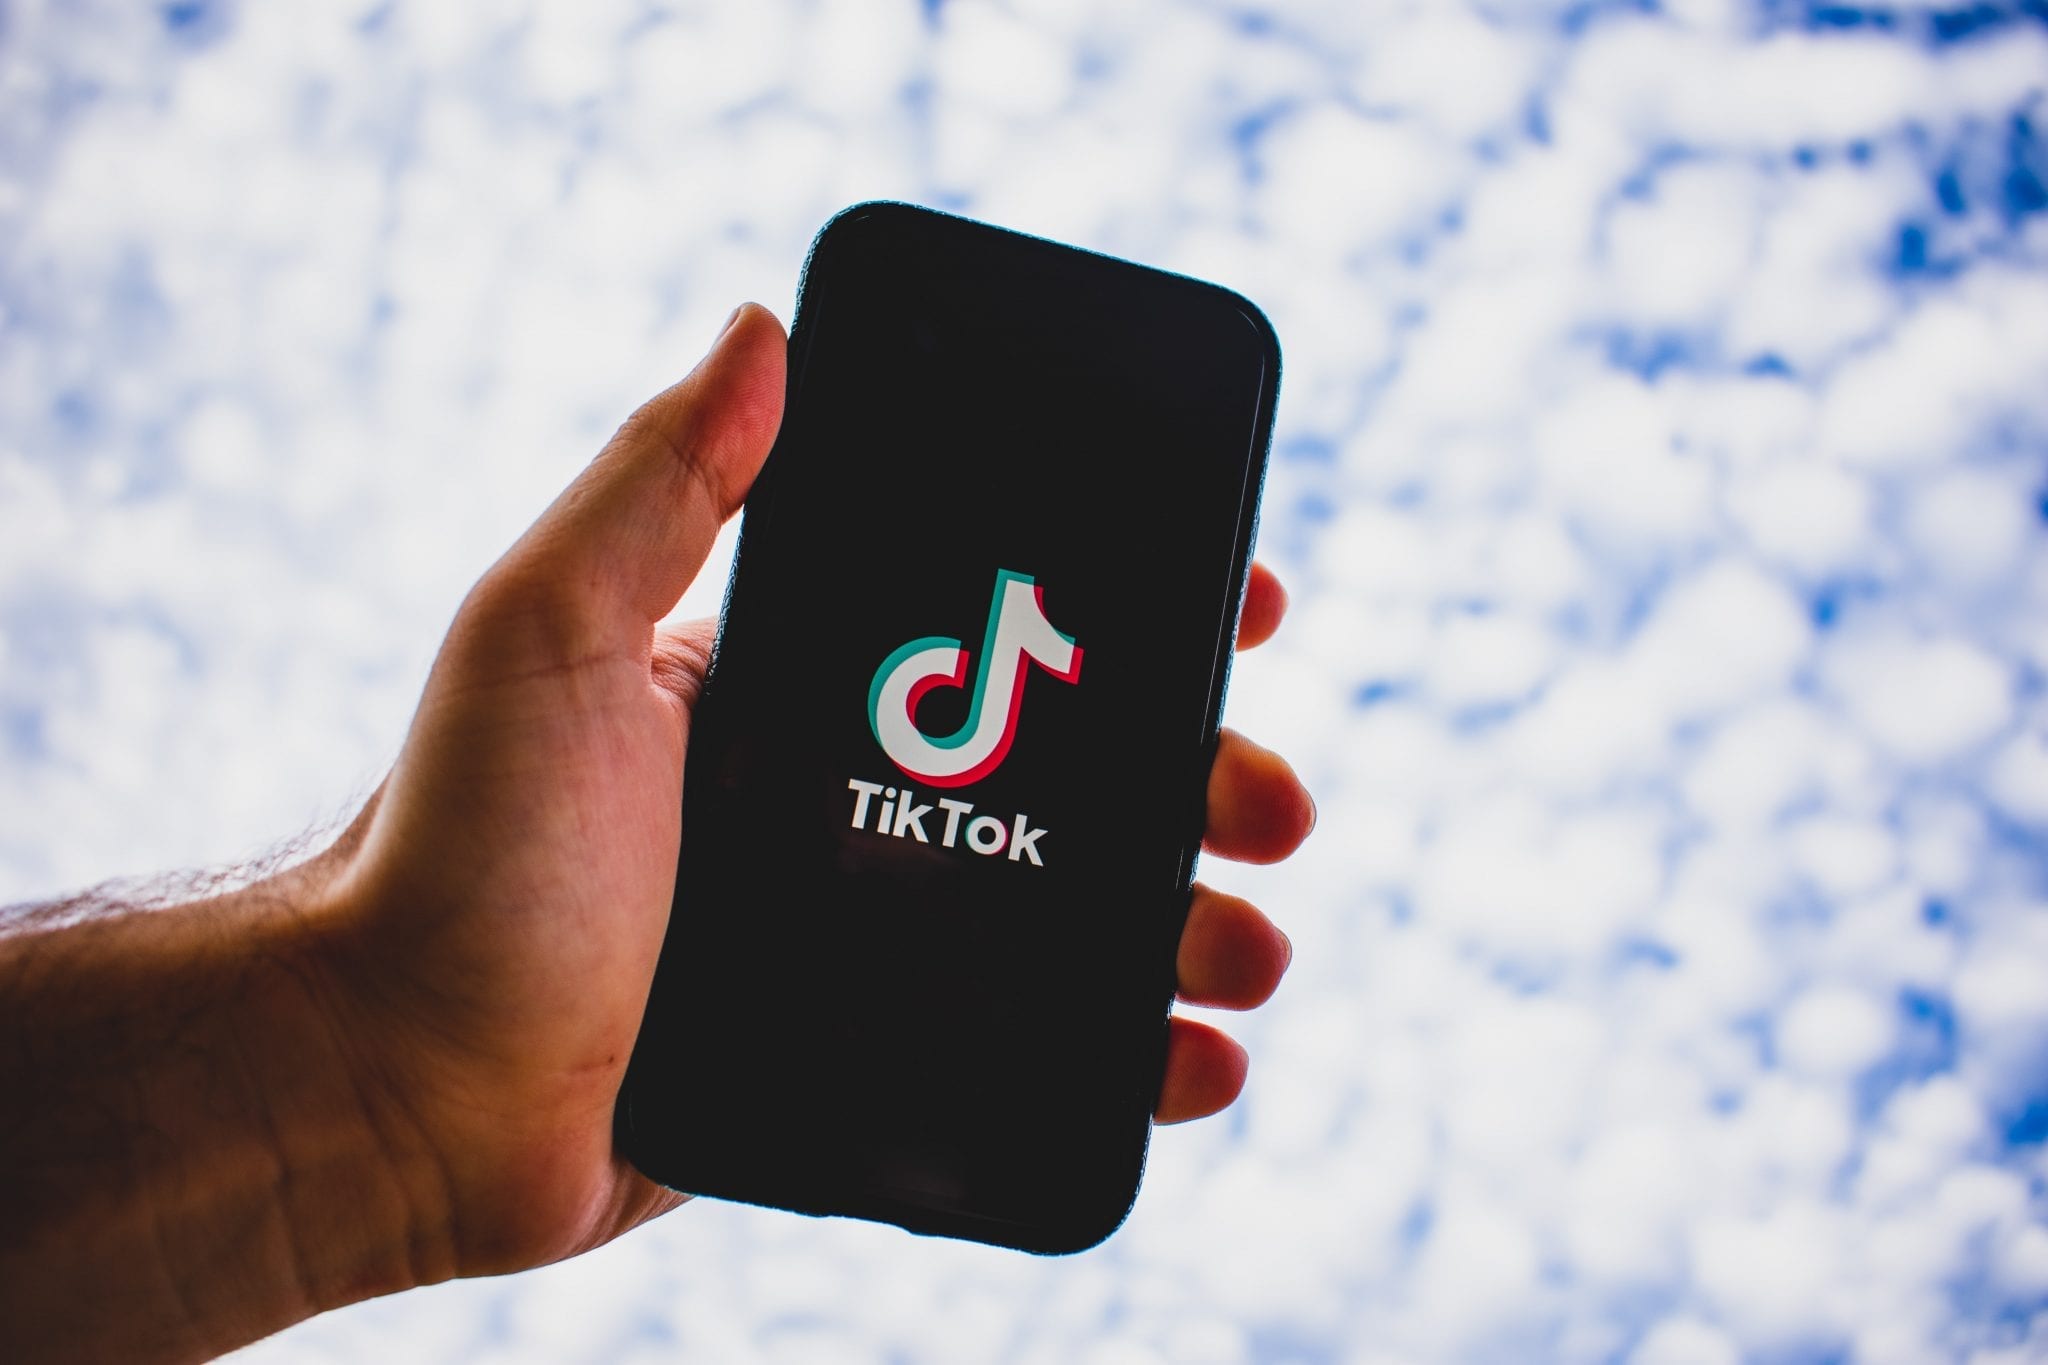 TikTok app loading on iphone